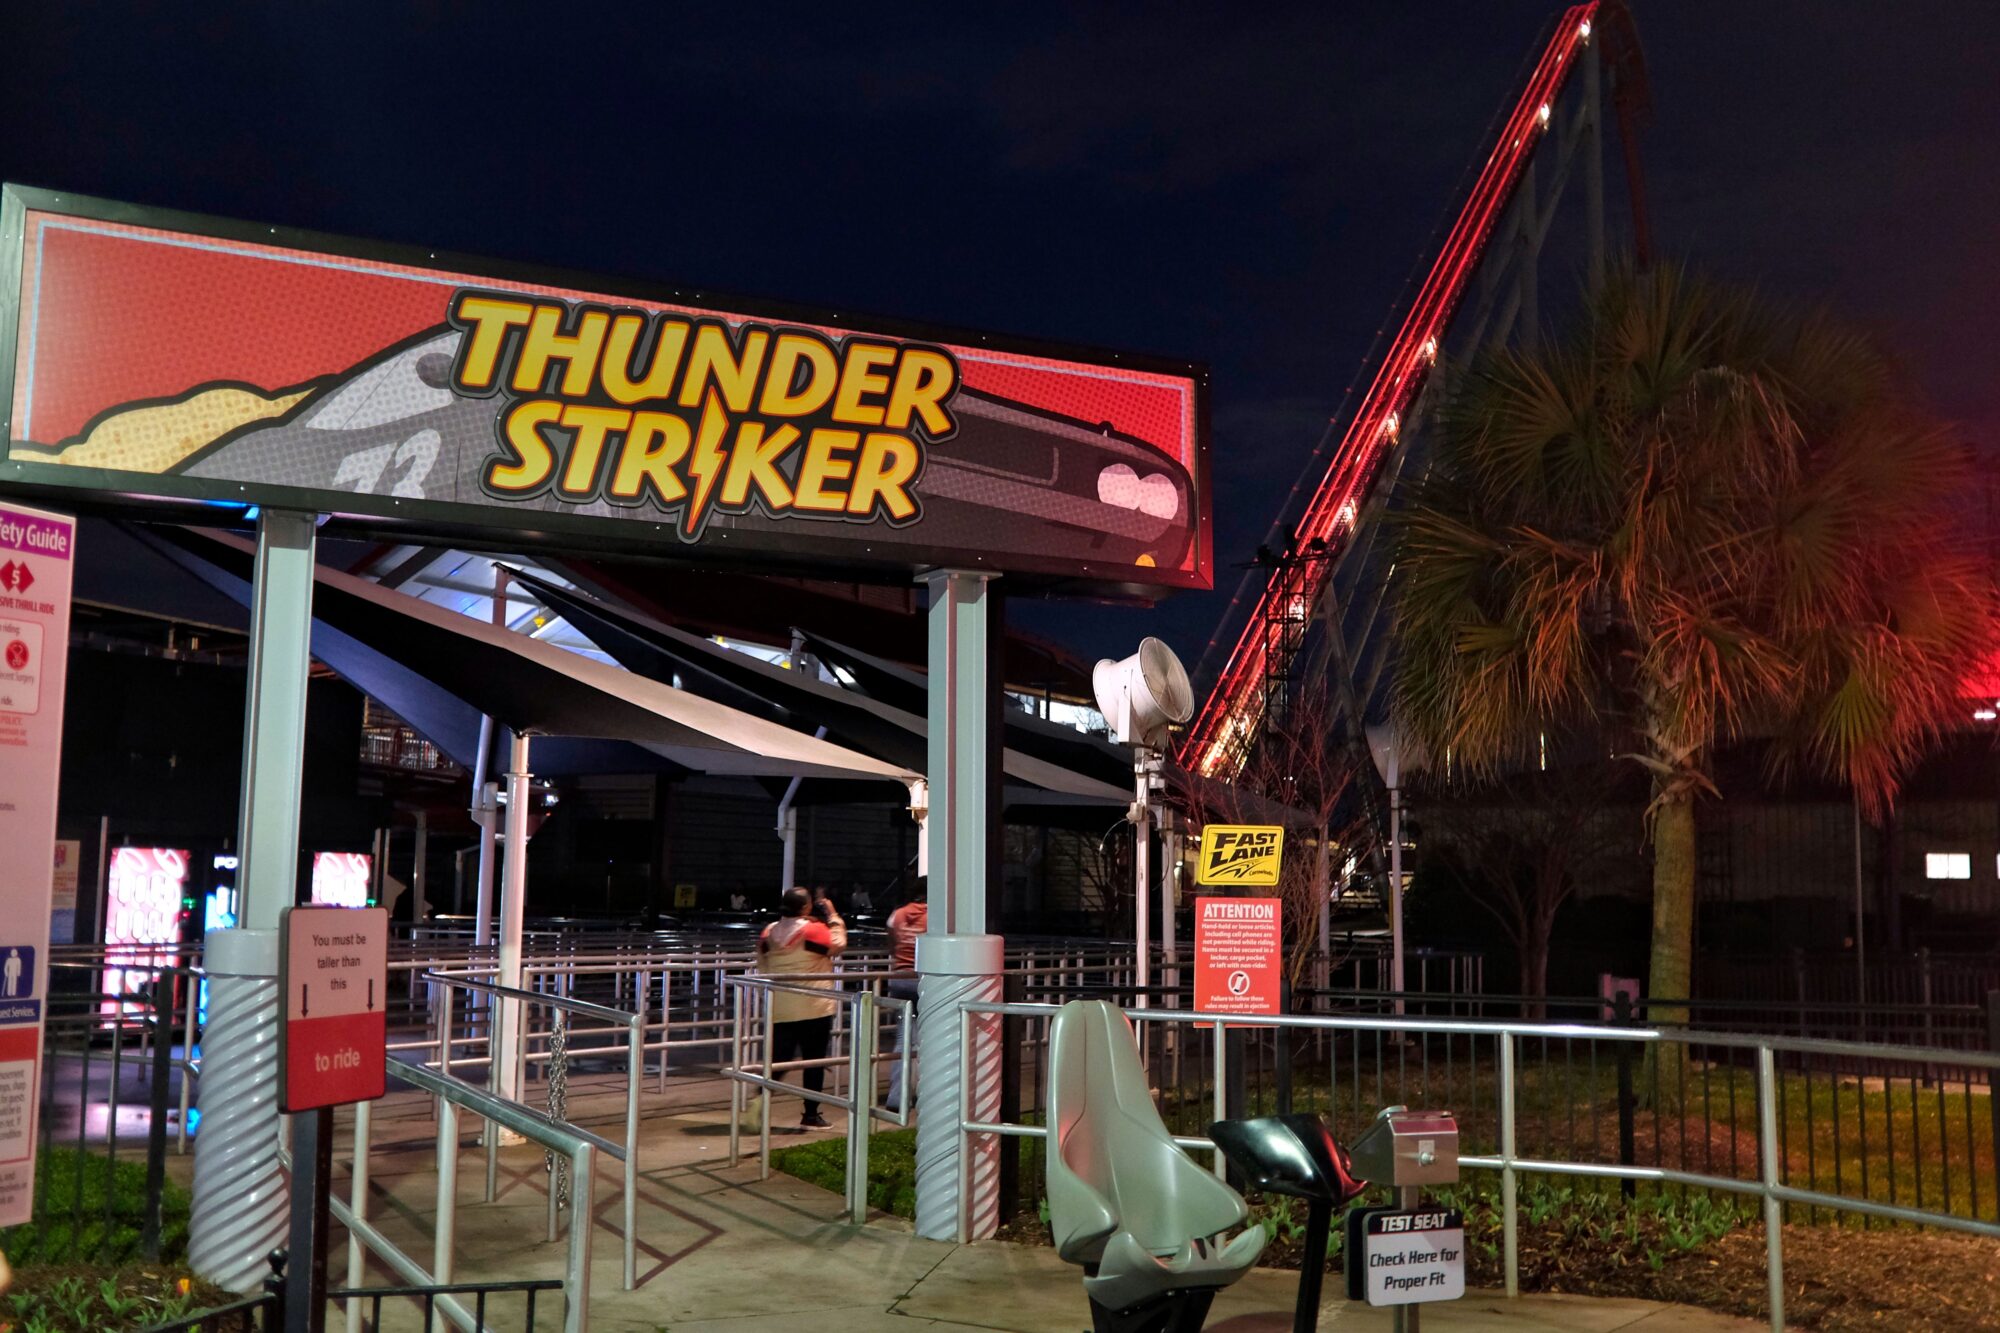 The entrance to Thunder Striker